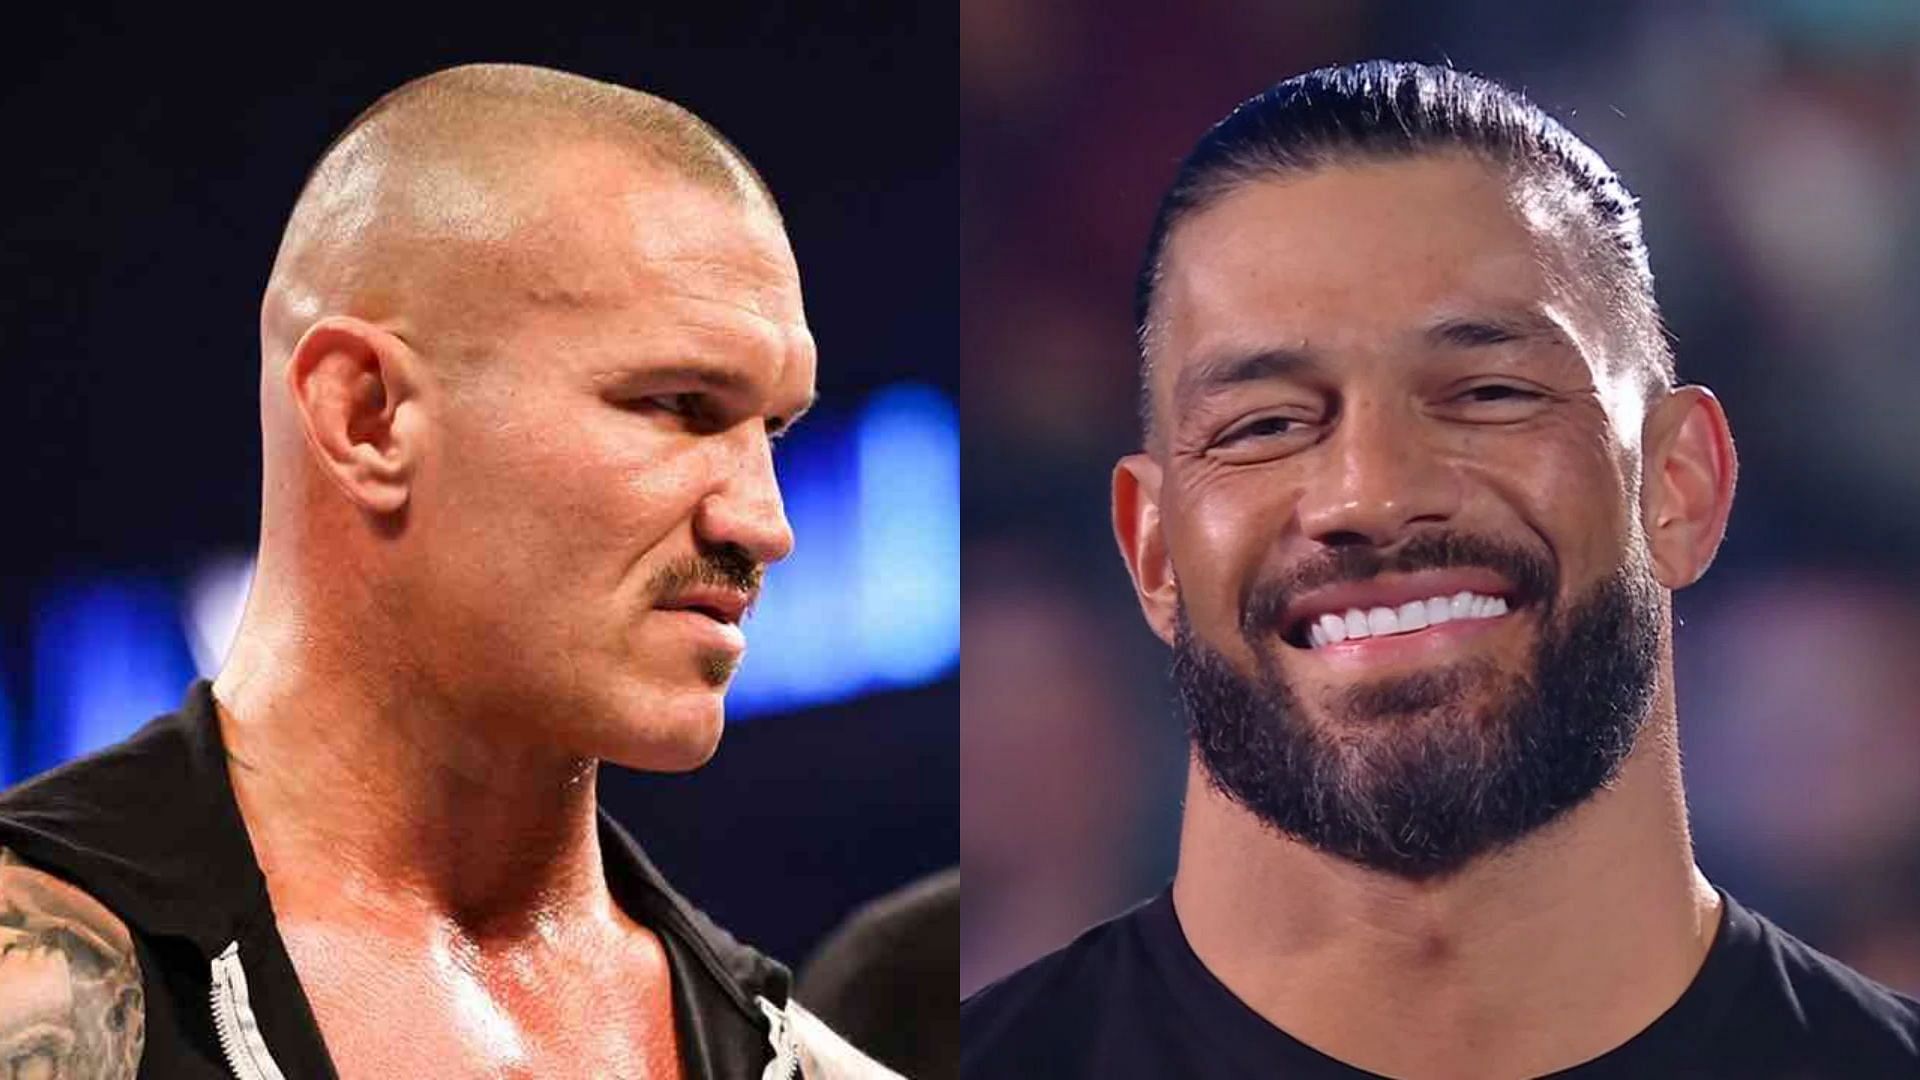 Randy Orton (left); Roman Reigns (right)